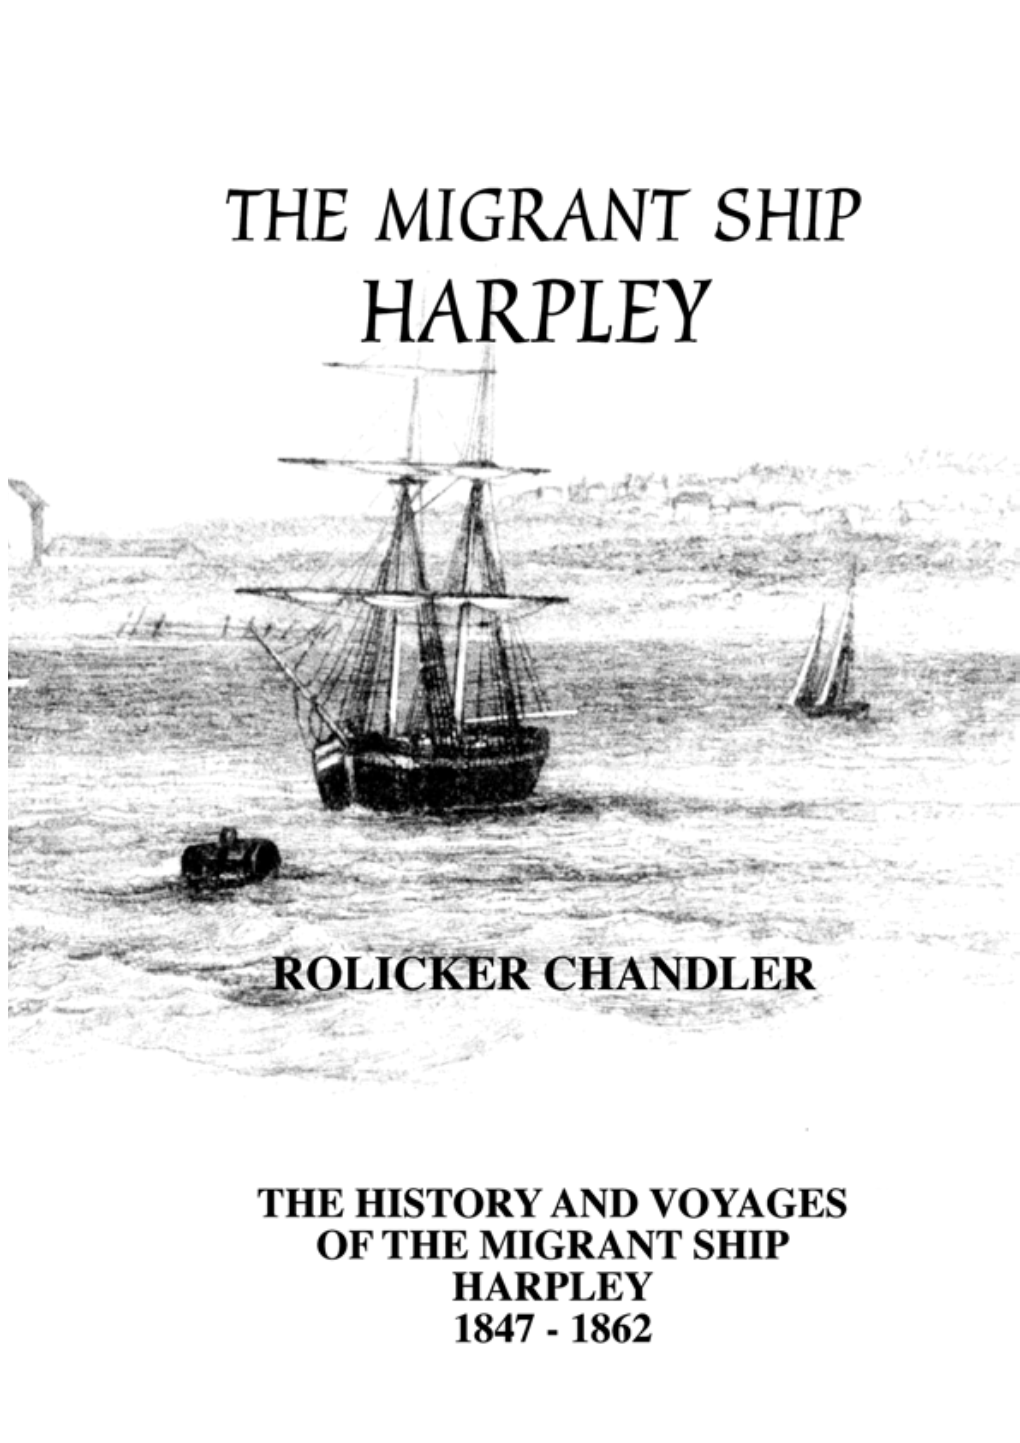 The Migrant Ship Harpley 1847 - 1862 Australian (Launceston) Built Her Voyages and Passengers